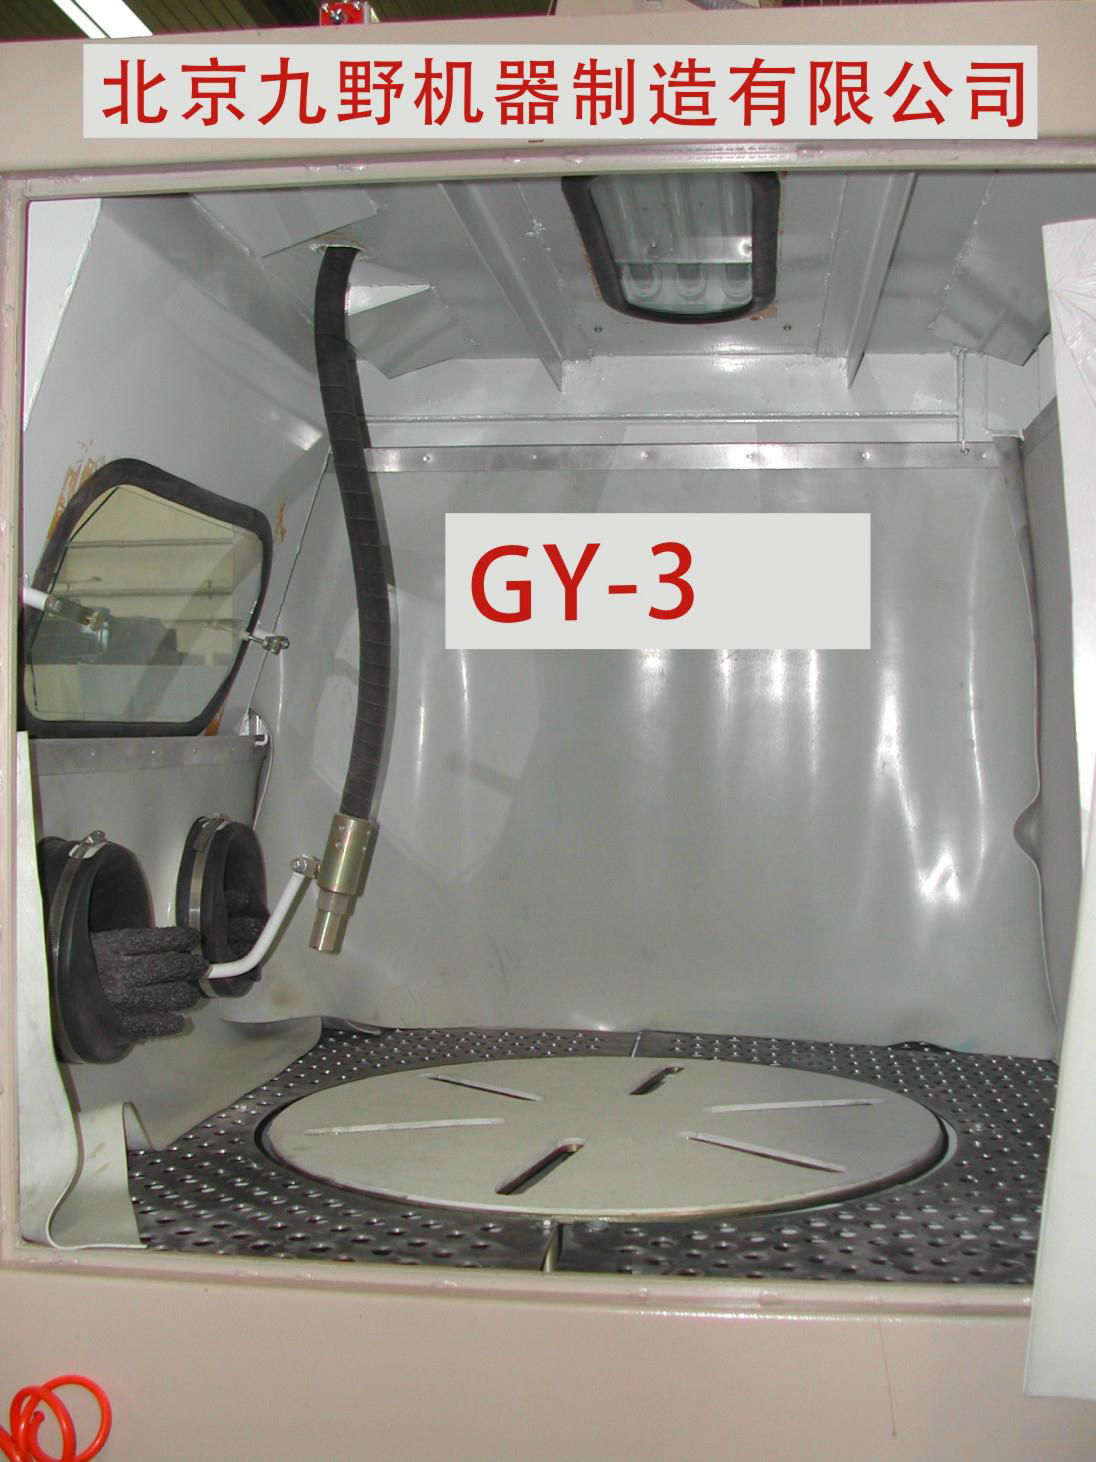 GY - 3 turntable type pressed dry sandblasting machine 2